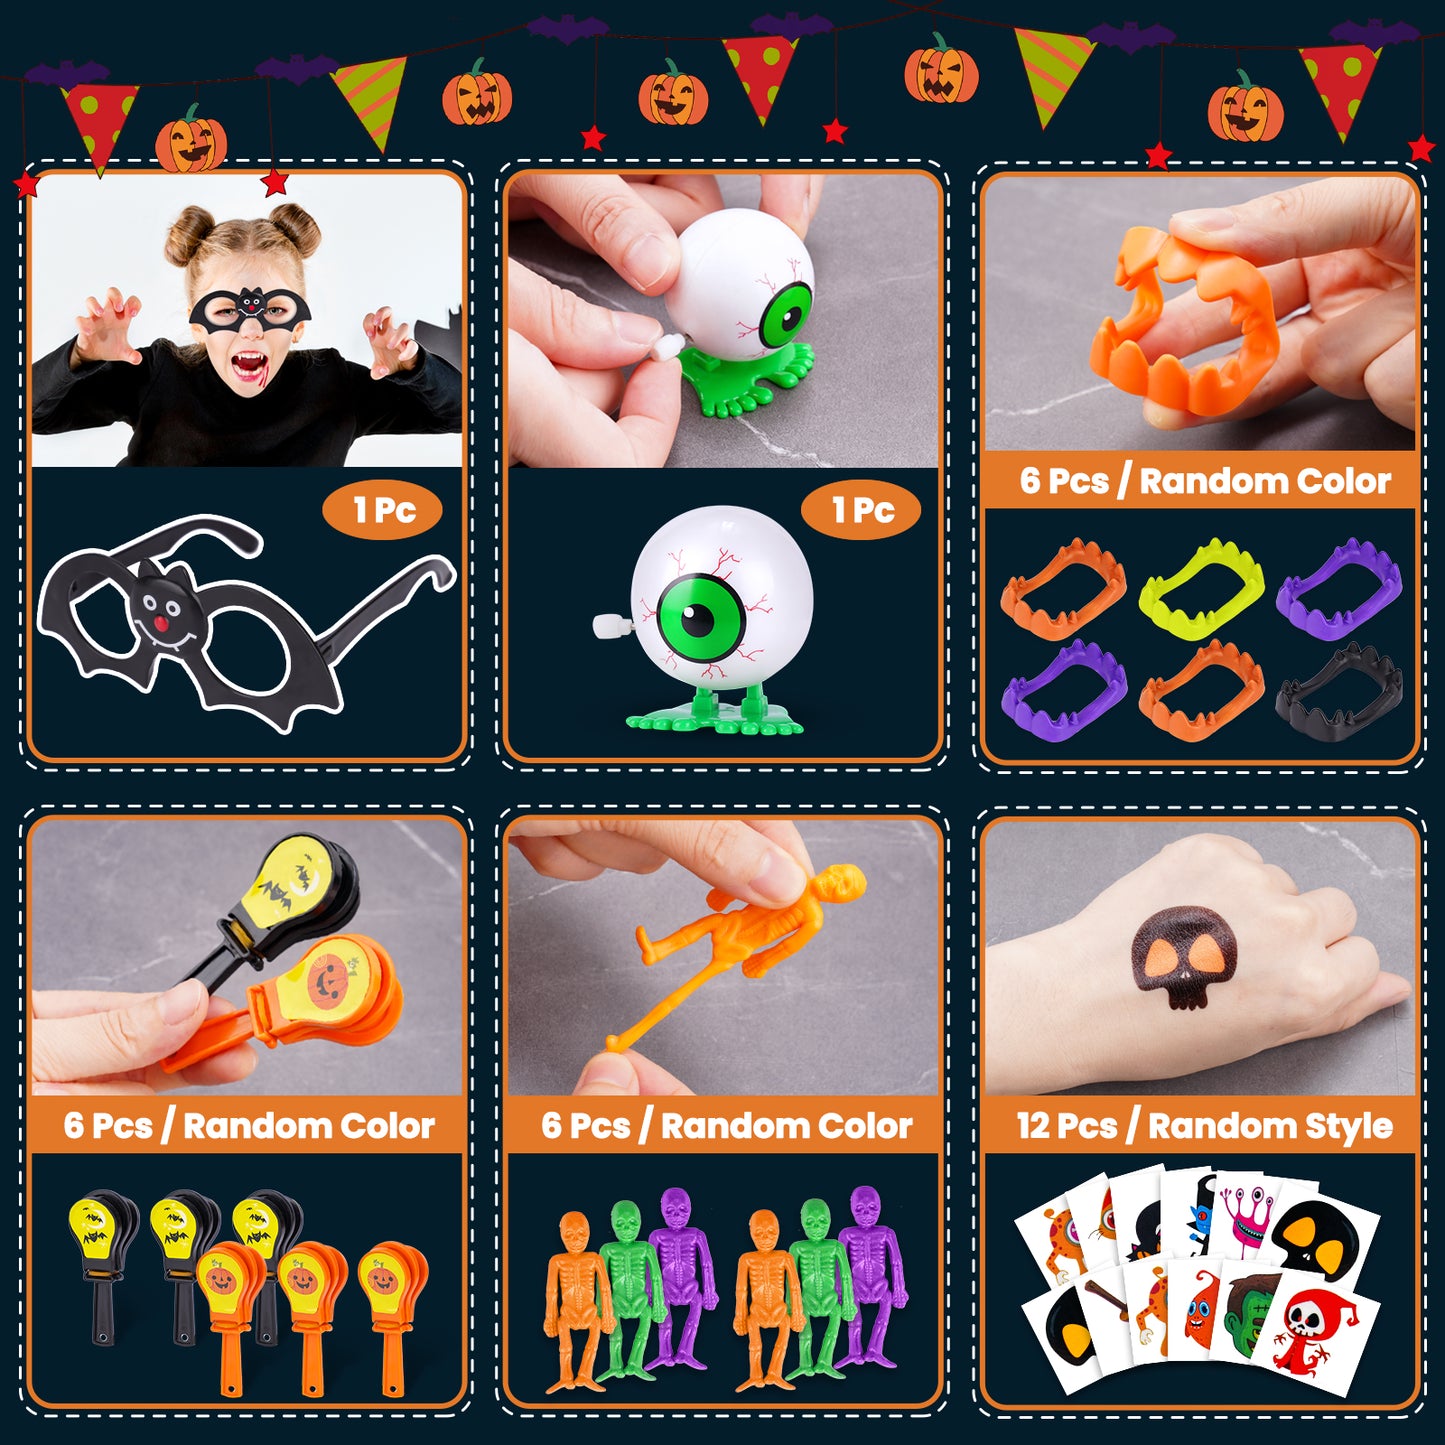 Halloween Party Toys 100PCS Assortment Super Fun Party Favors Box Trick or Treat